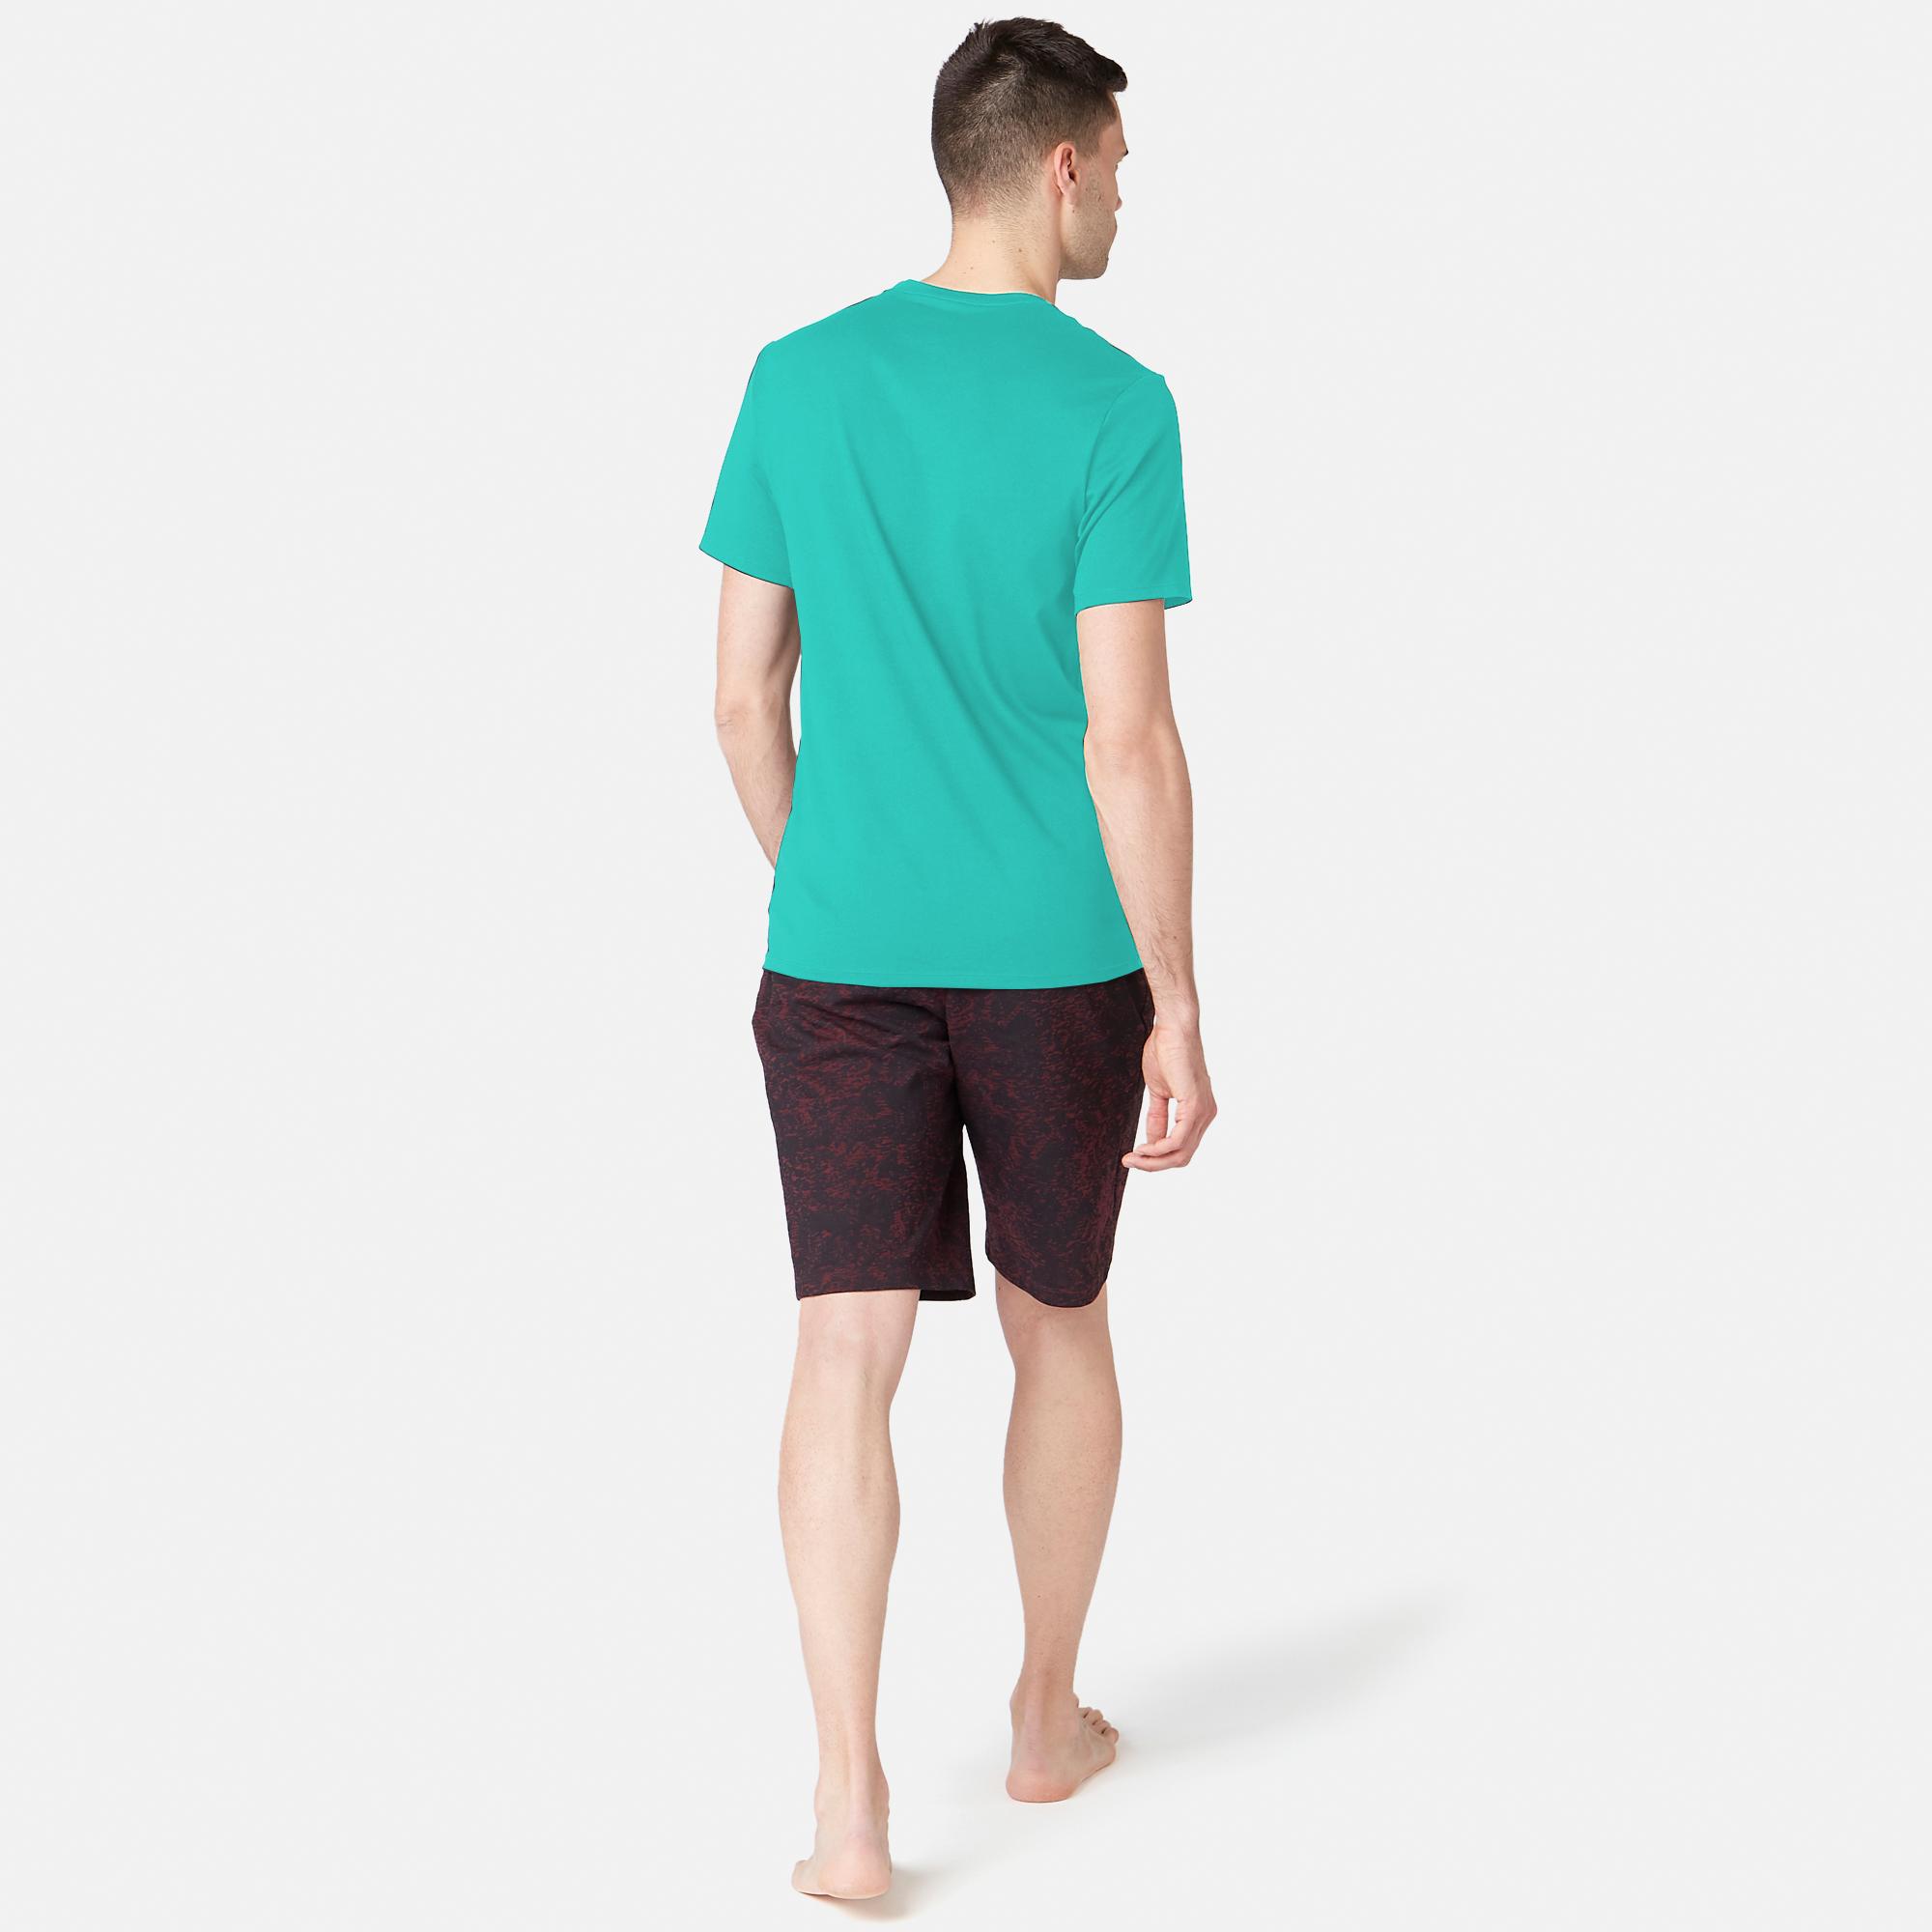 DOMYOS Men's T-Shirt Sportee - Turquoise